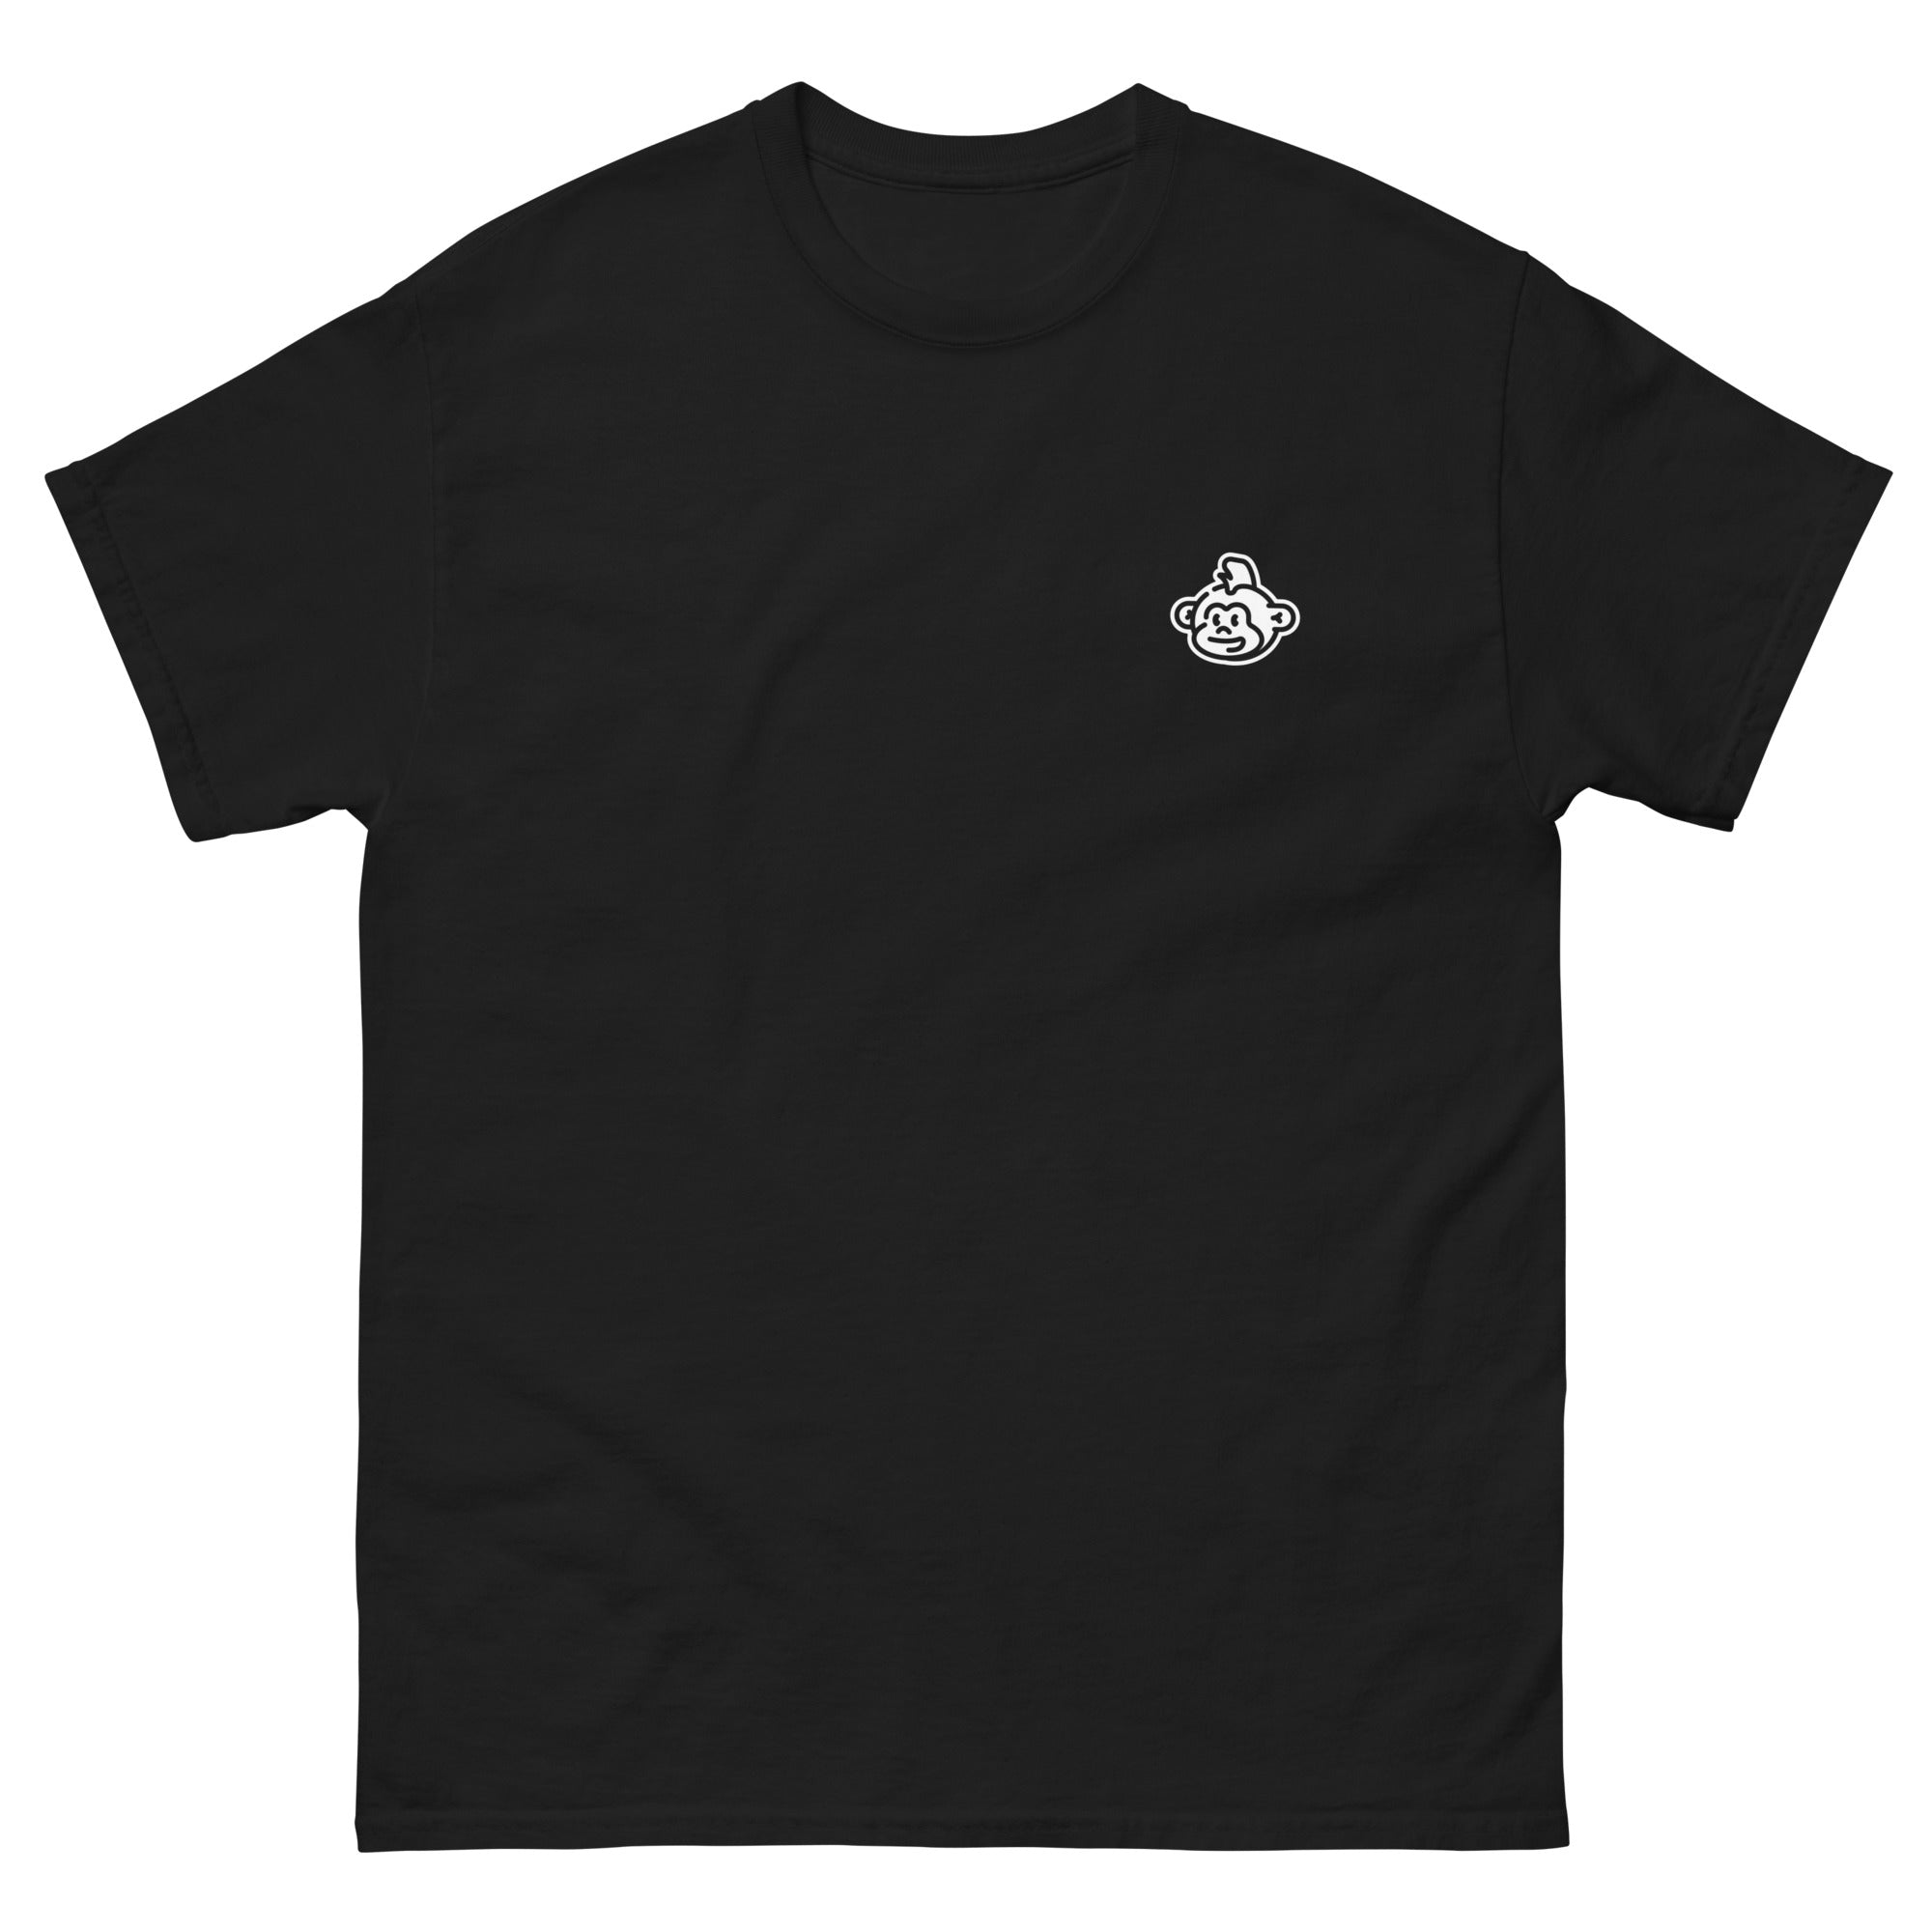 Rockin Monkey Script Logo T-Shirt